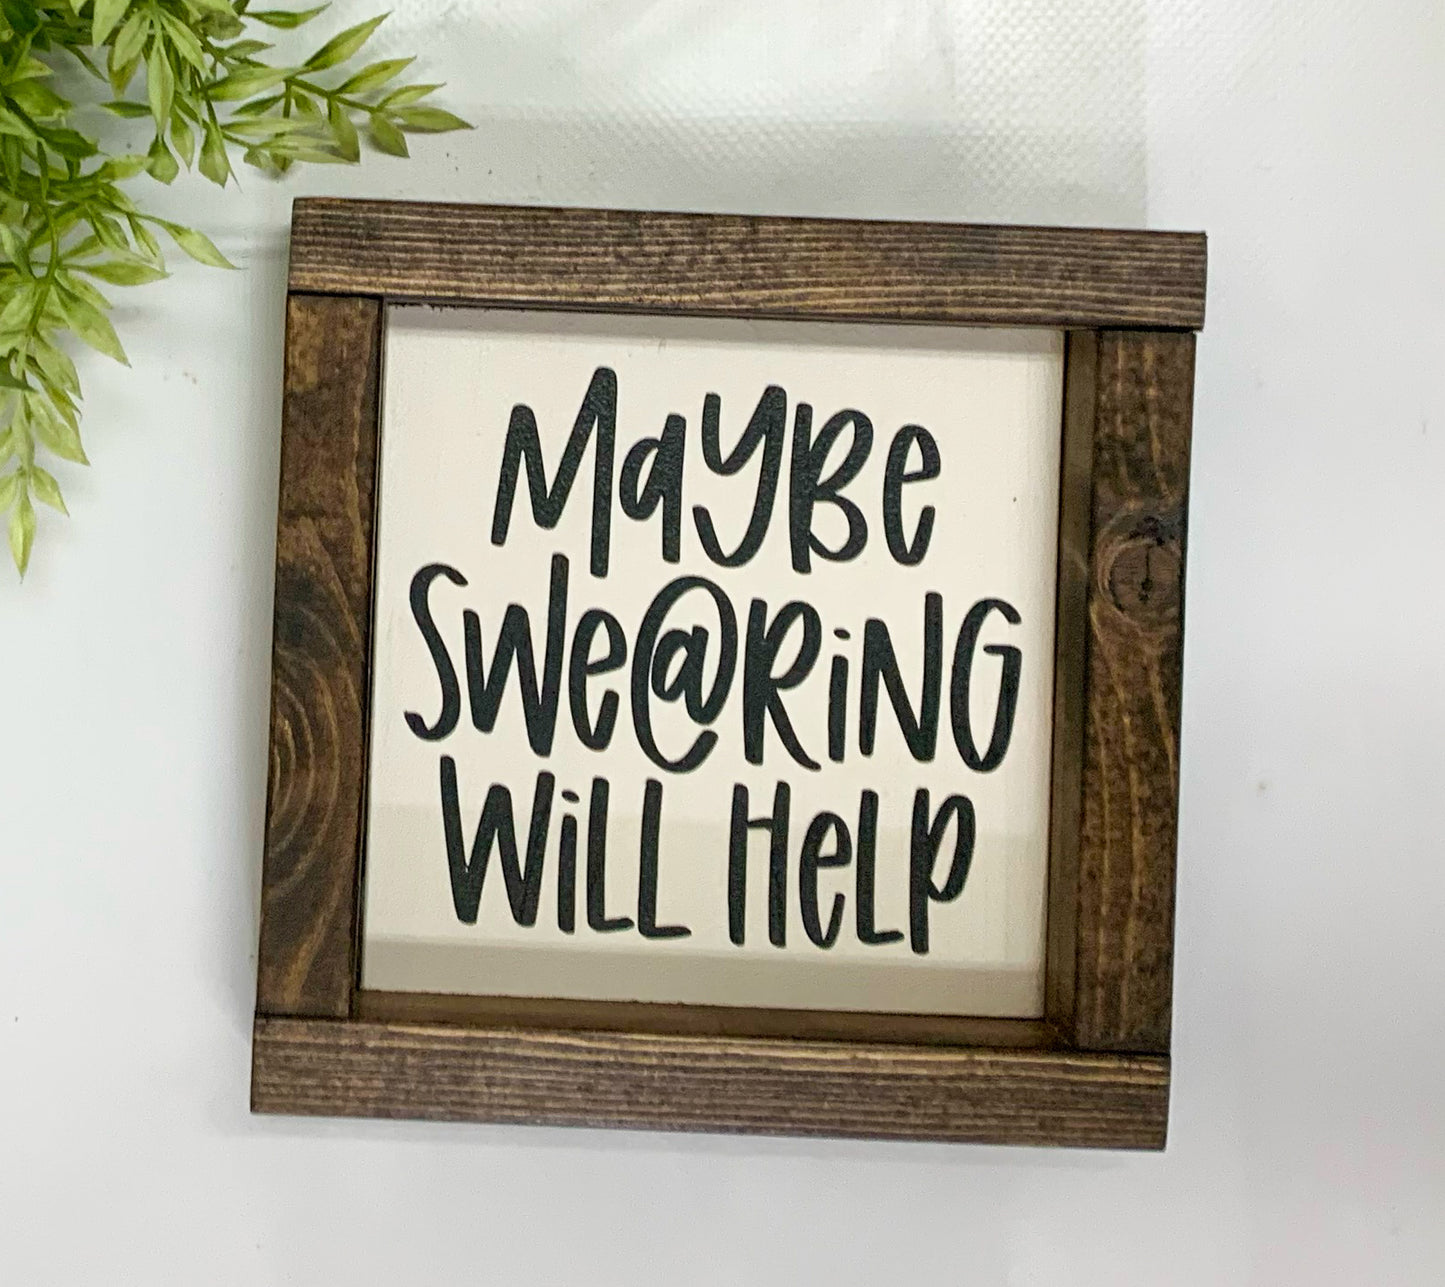 Handmade Sign - Maybe Swearing Will Help 2.0